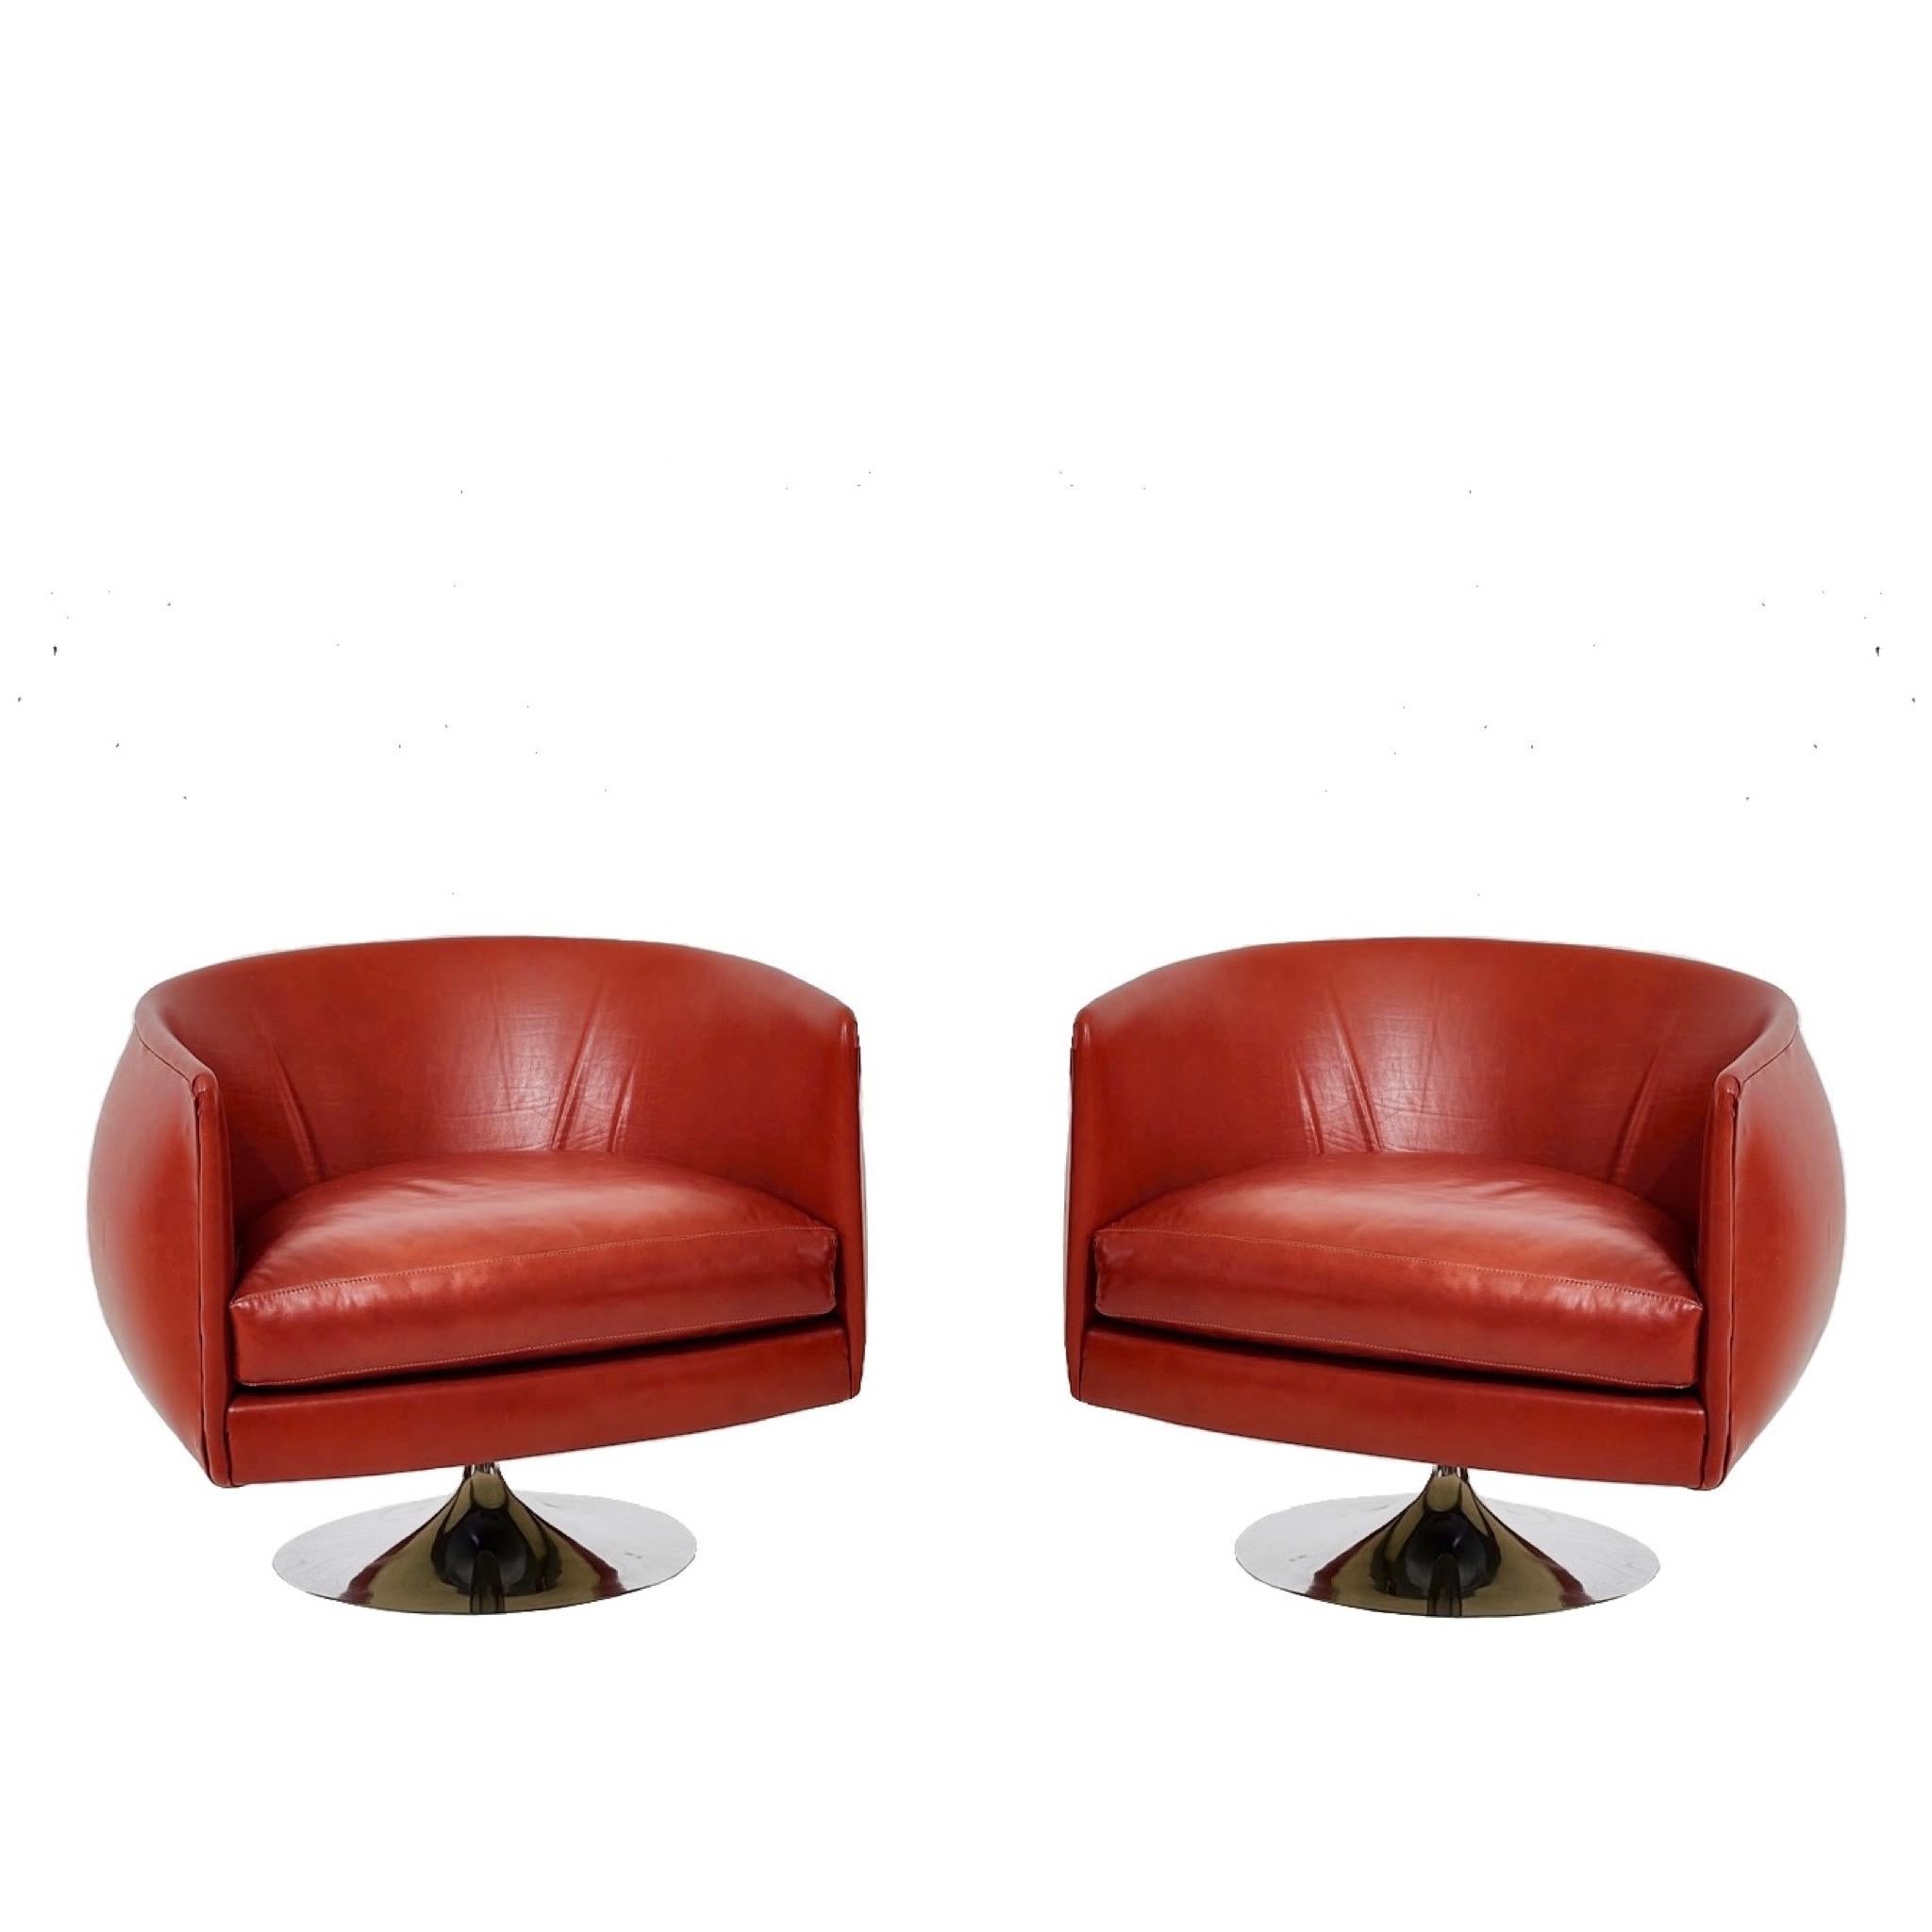 Modern Joseph D'Urso Pair Leather Swivel Lounge Chairs, Knoll, 1980